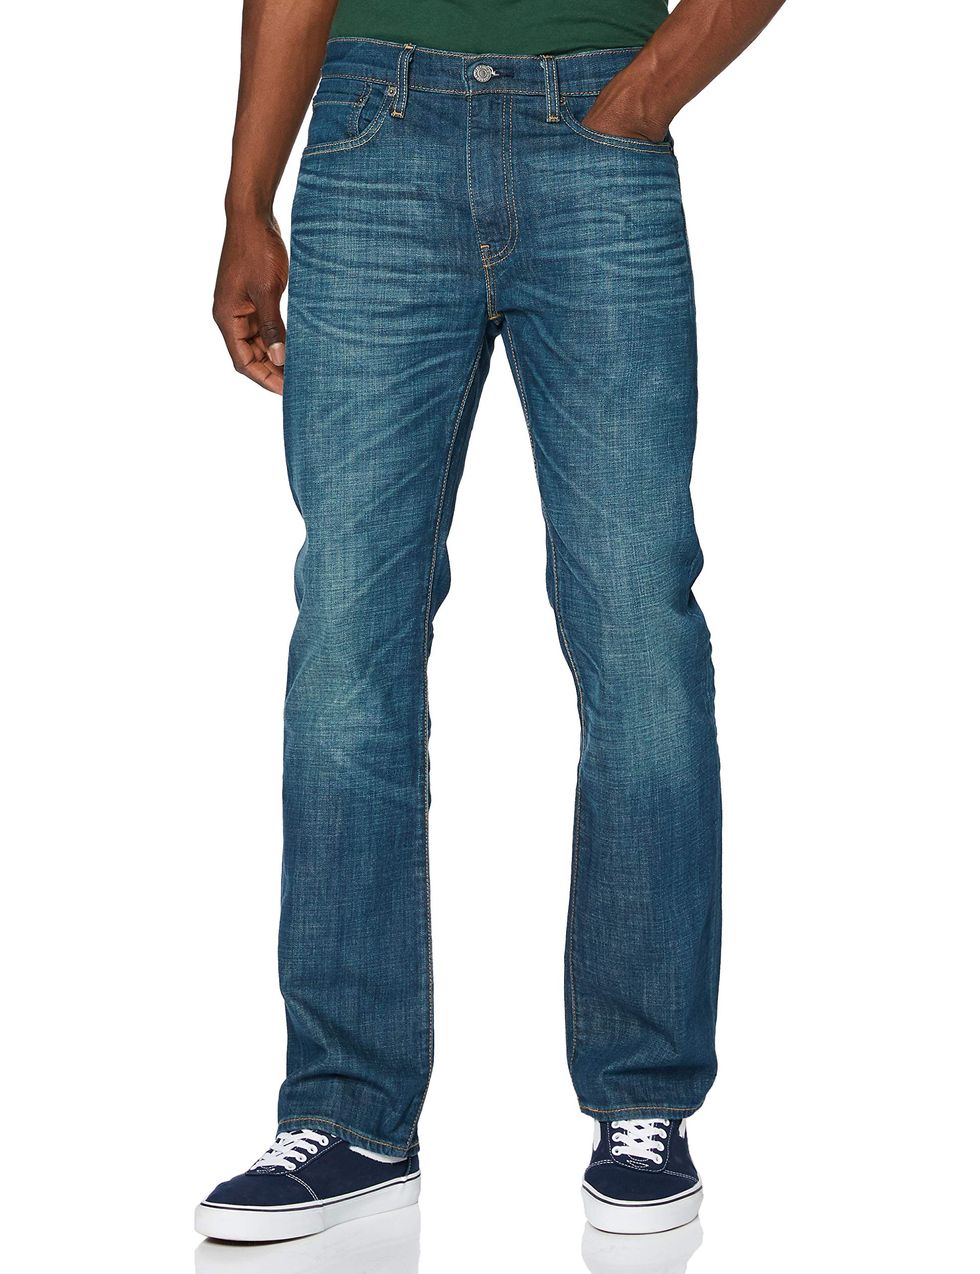 Levi's Men's 527 Slim Boot Cut Jeans, Explorer